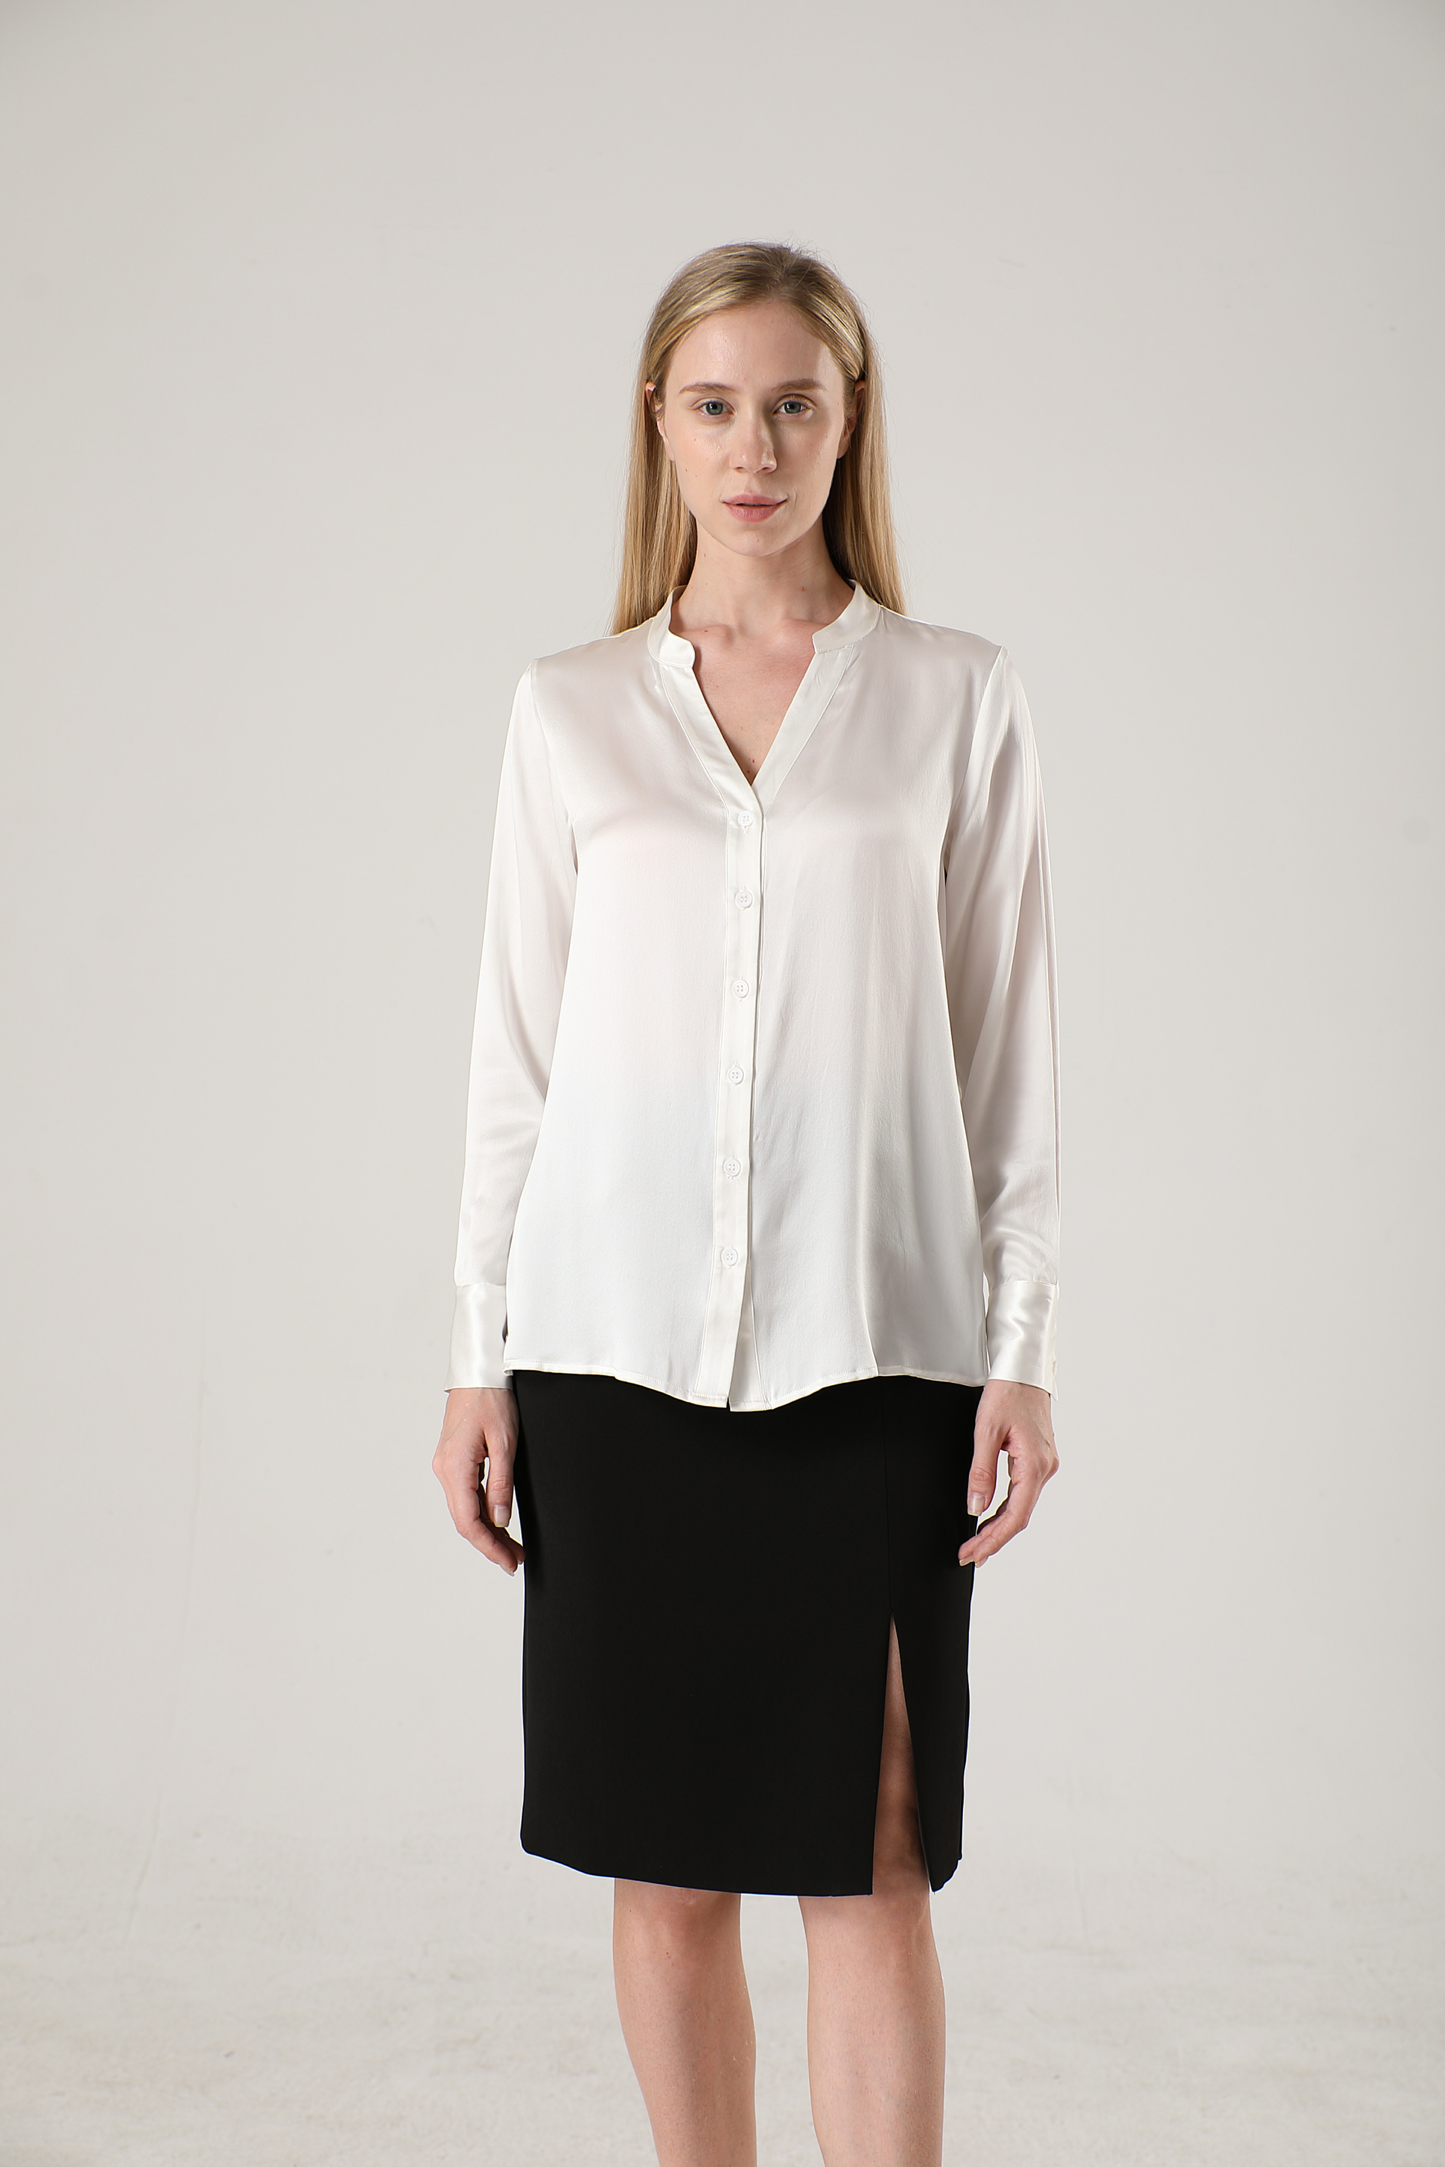 Women's silk blouse with mandarin collar